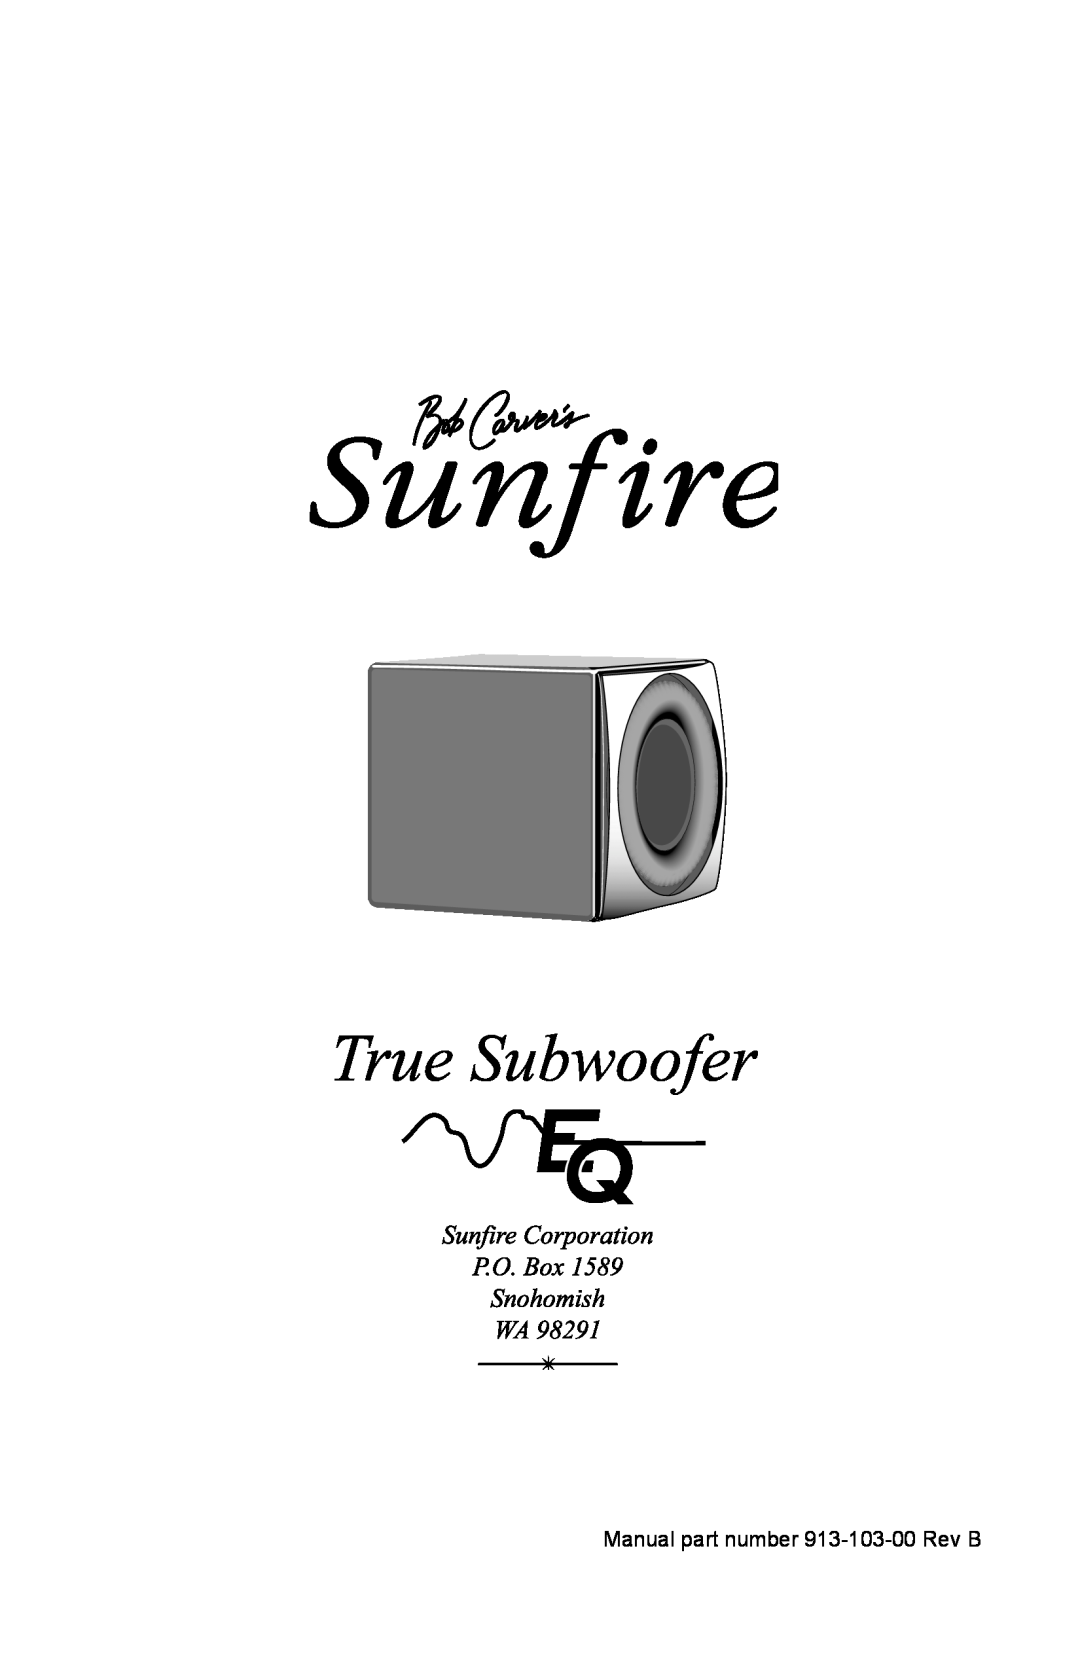 Sunfire True Subwoofer Signature and Standard Version user manual Manual part number 913-103-00Rev B 